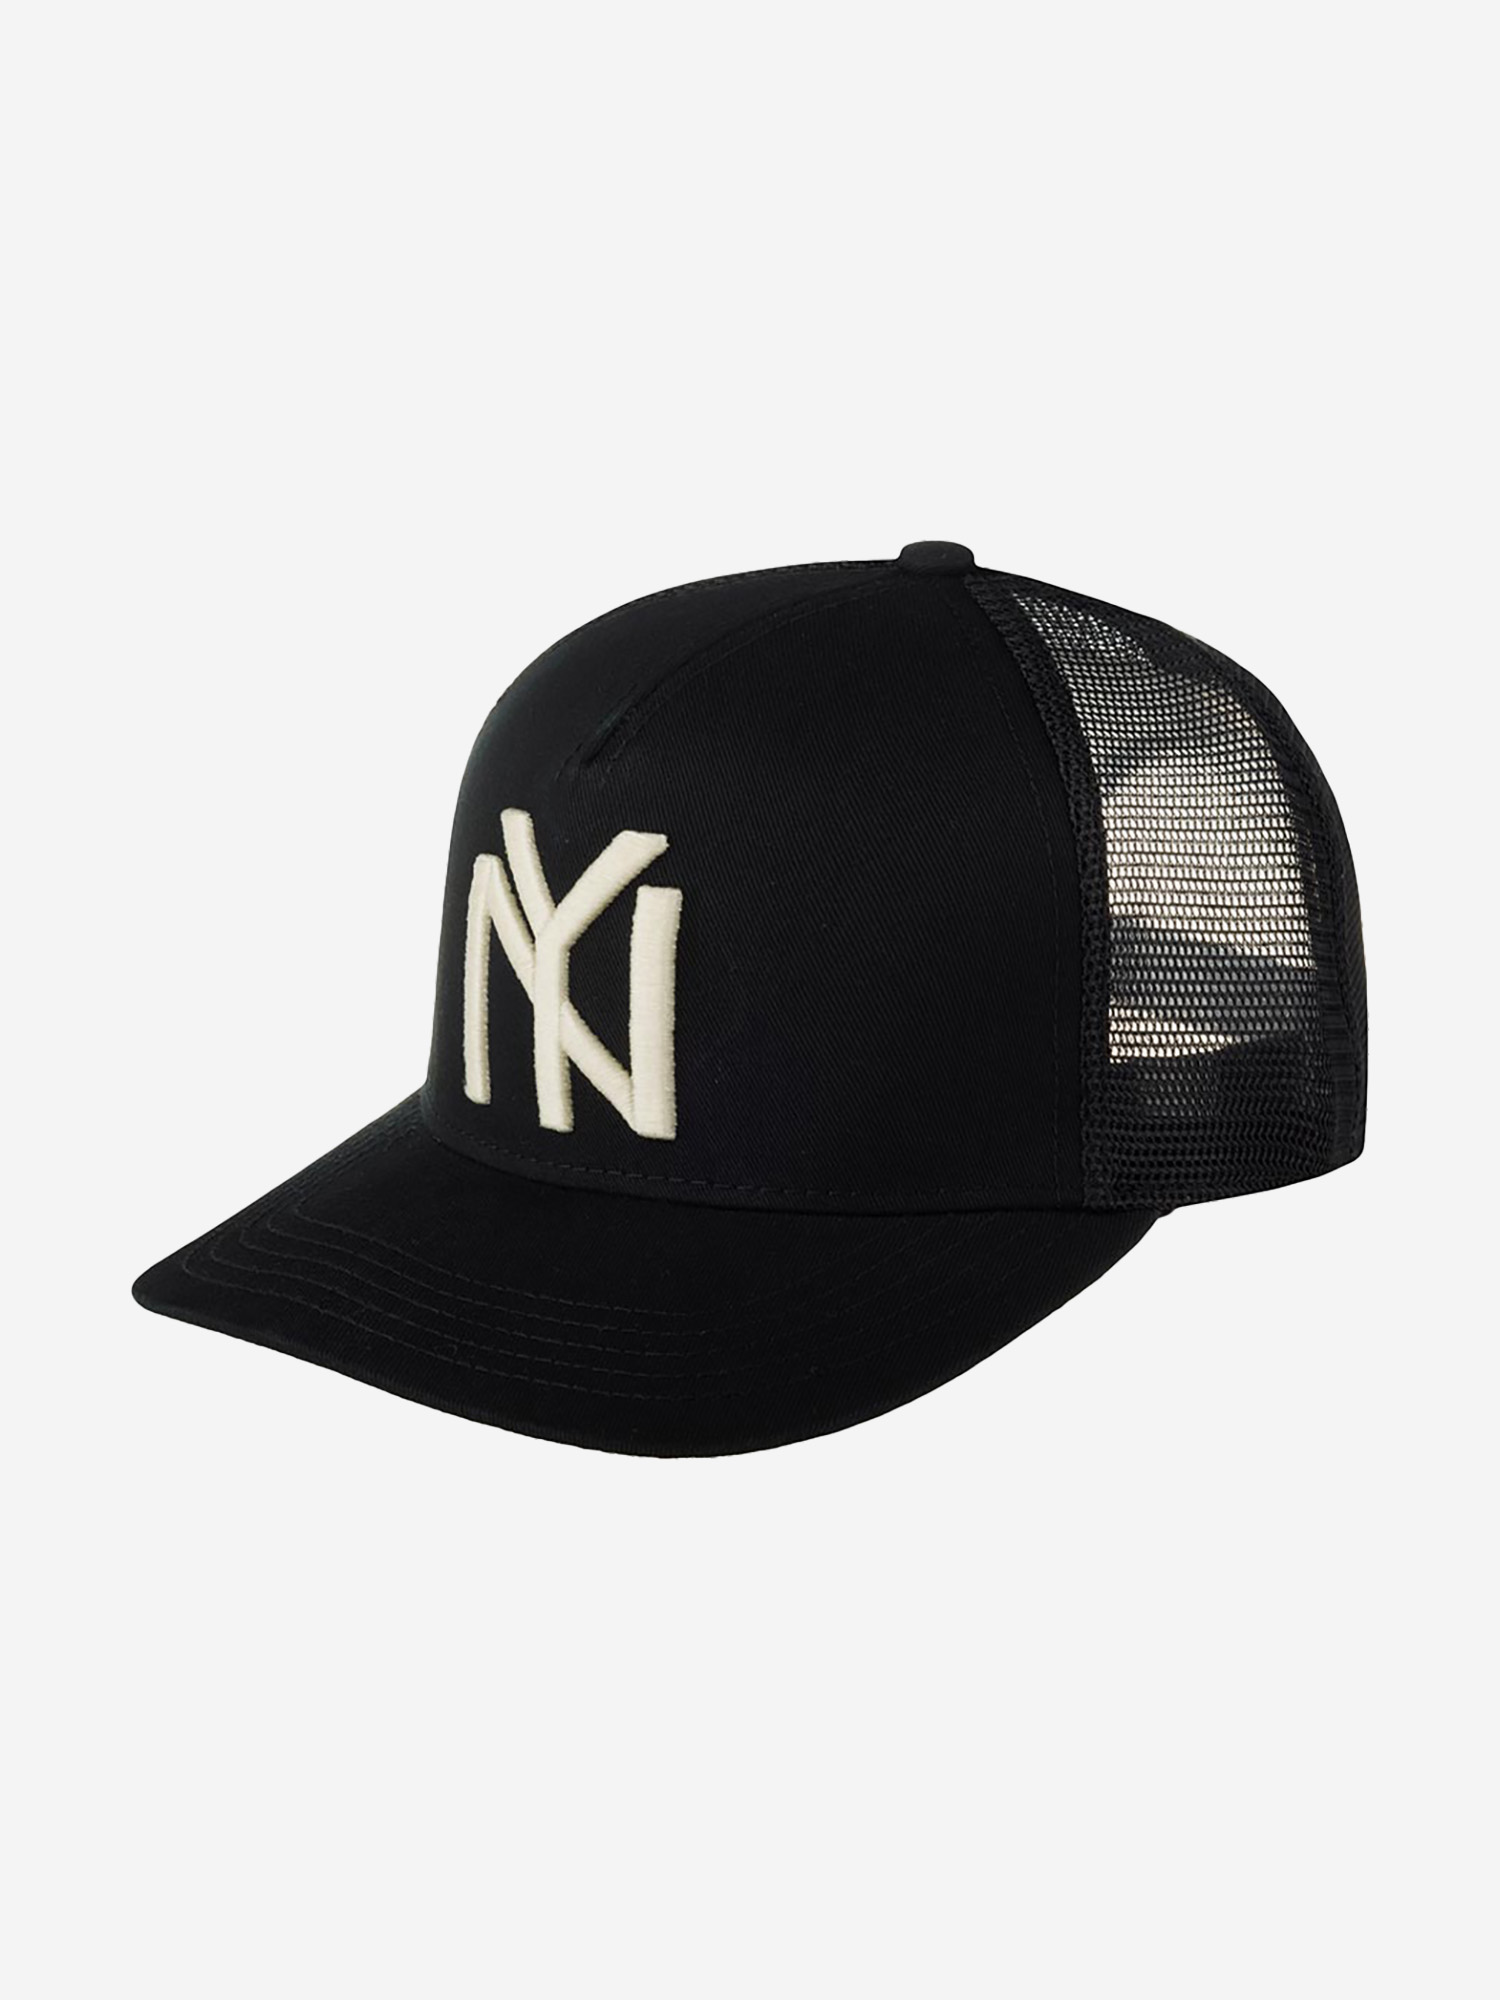 Бейсболка AMERICAN NEEDLE 22018A-NBY New York Black Yankees Archive NL (черный), Черный шапка с отворотом american needle 21019a nby new york black yankees cuffed knit nl